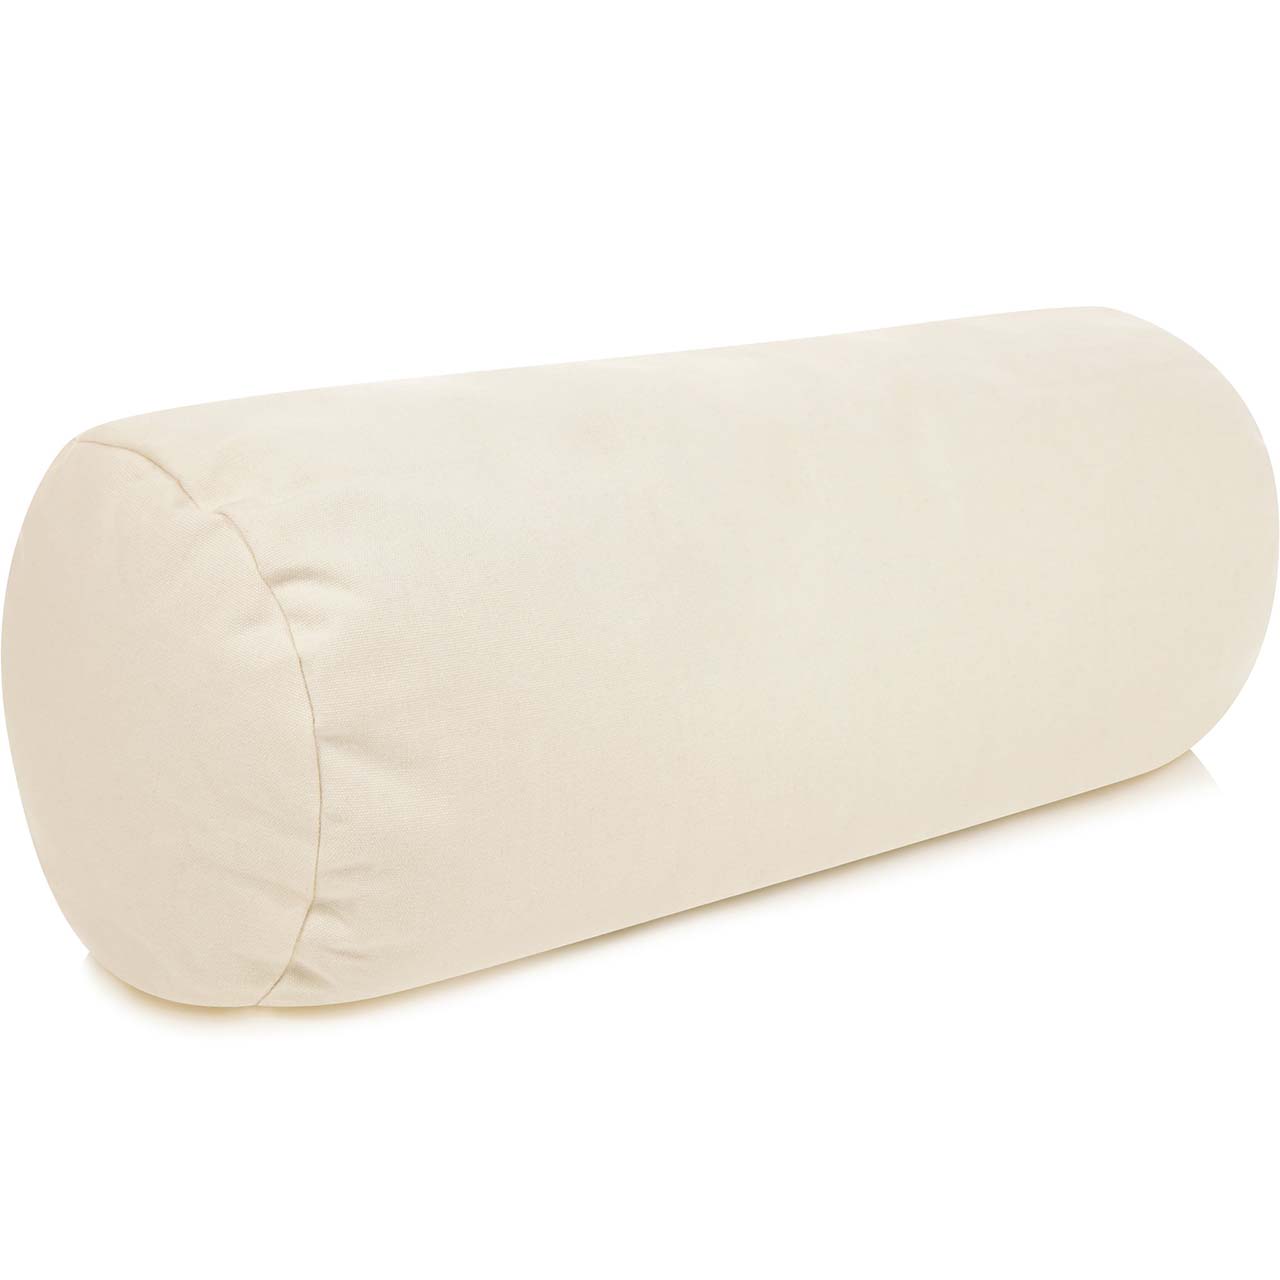 Organic Pillow With Buckwheat Husk, Bedsore Pillow With Hole, Buckwheat  Square Pillow, Hulls Pillow, Hemorrhoids Pillow, Morocco Pillow 